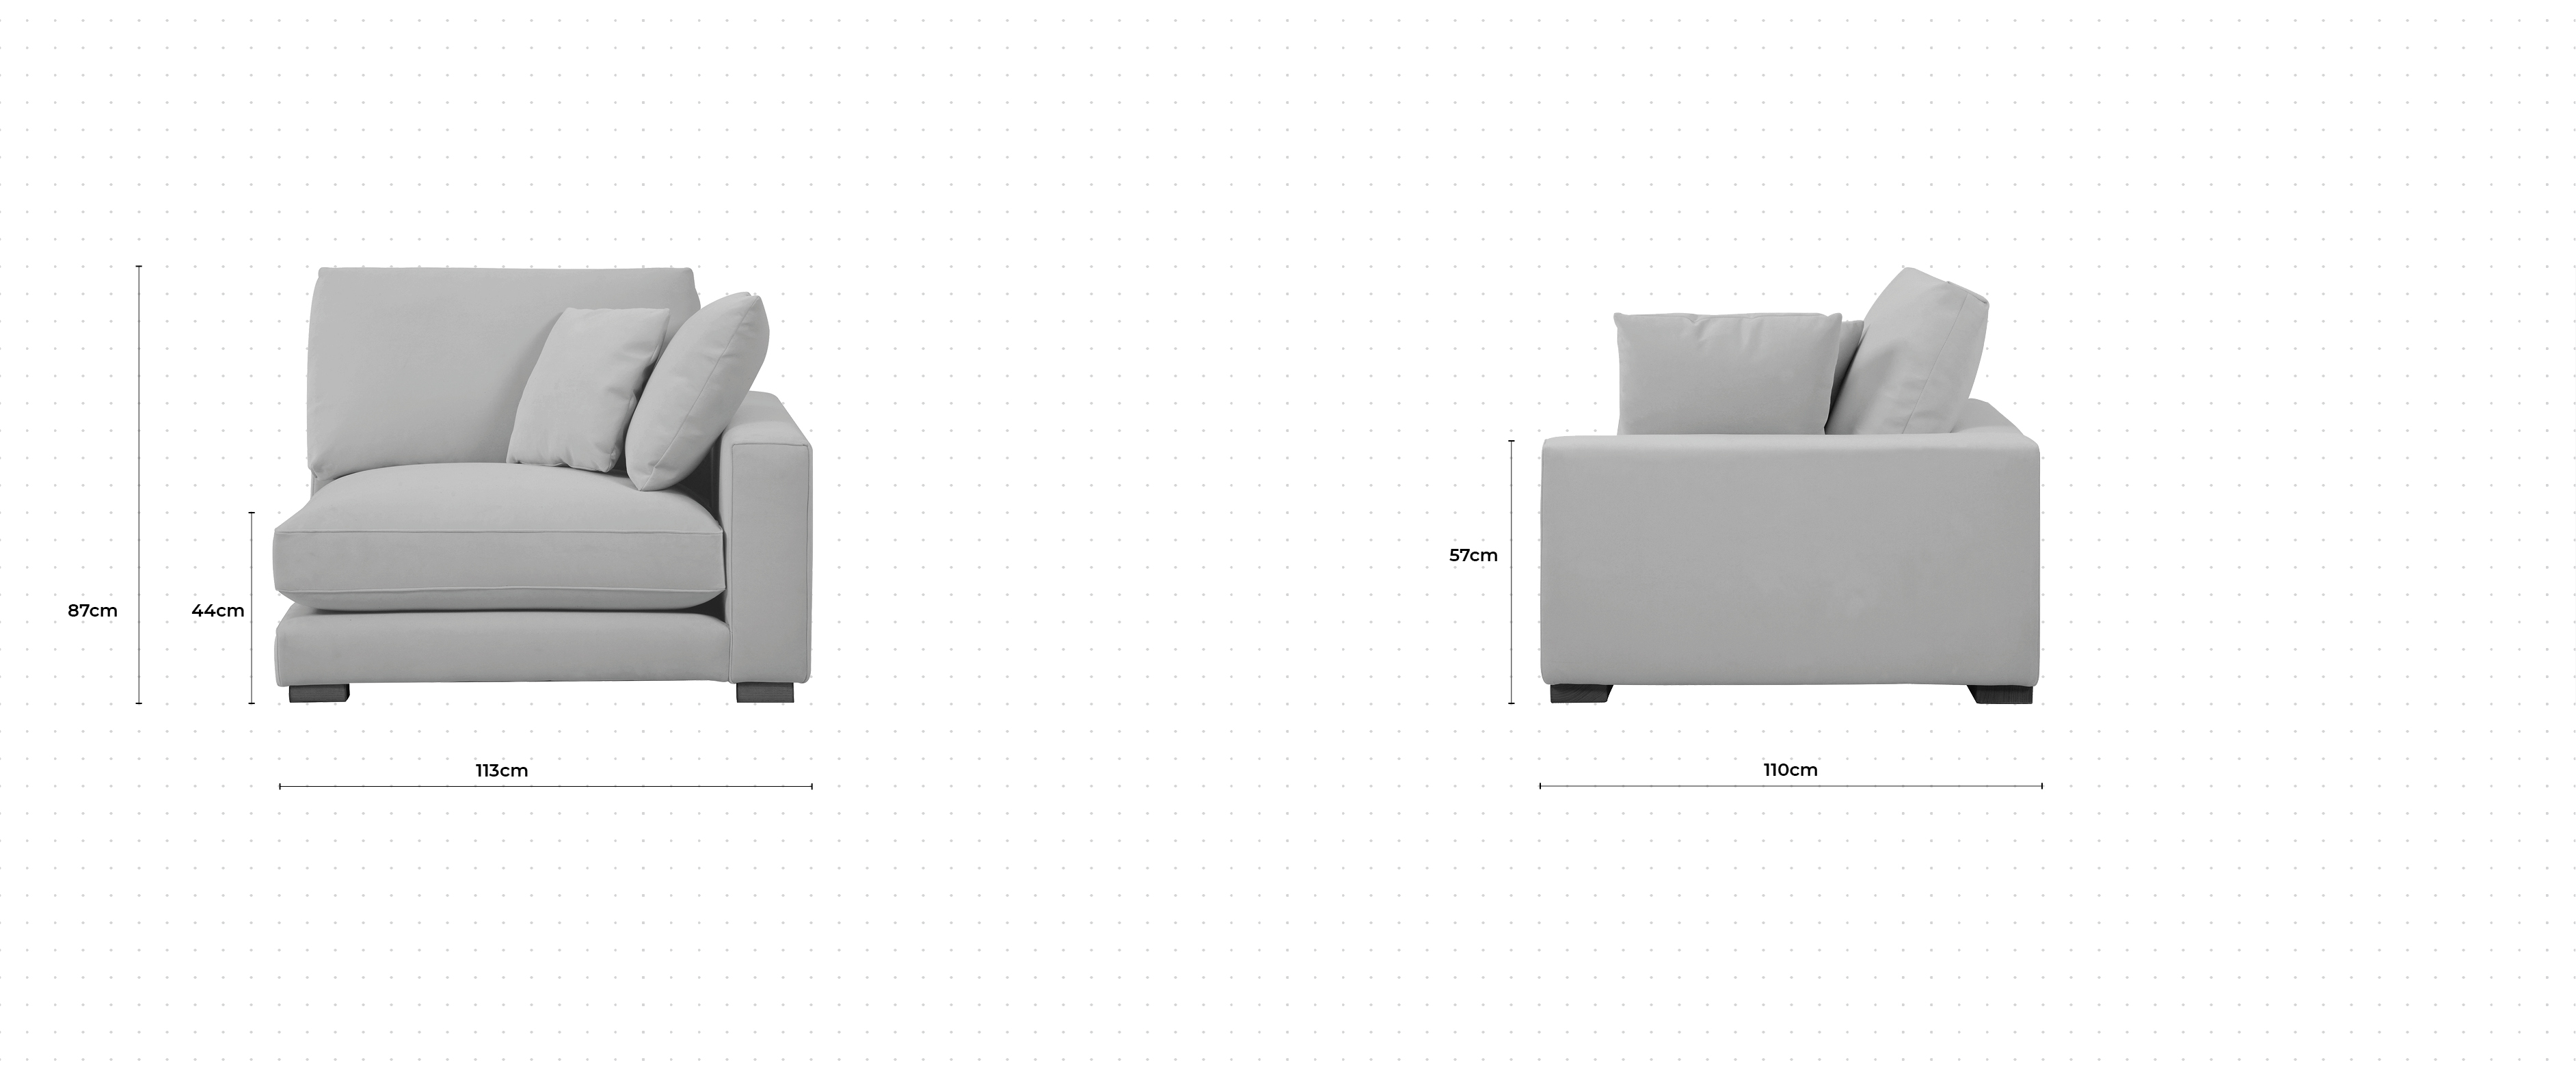 Dillon 1 Seater Sofa RHF dimensions